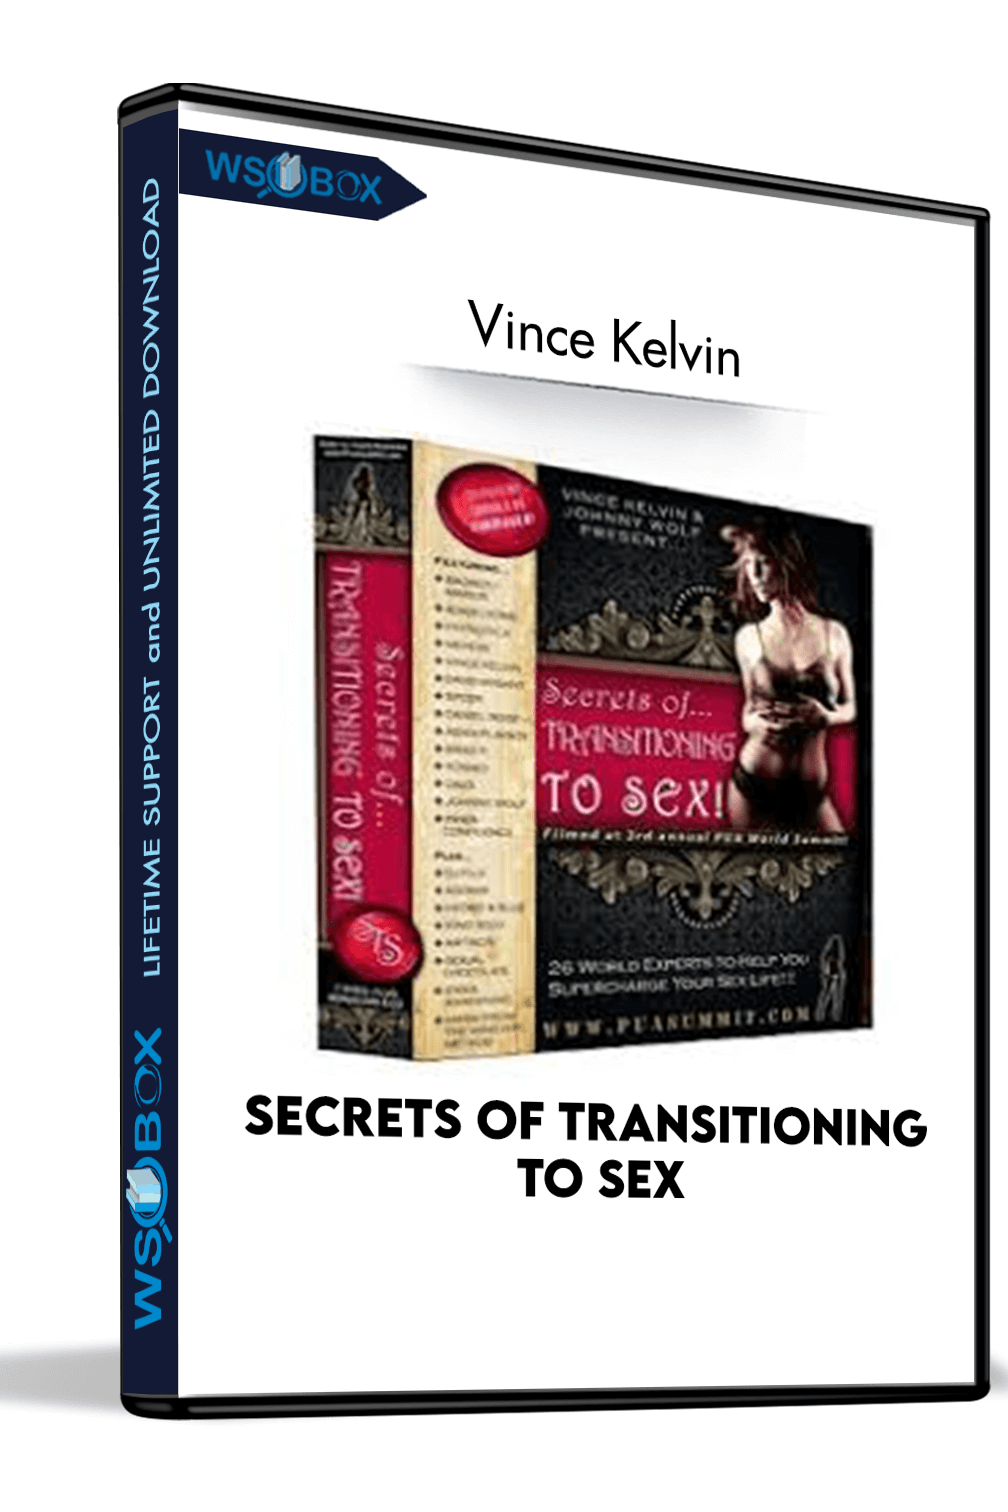 secrets-of-transitioning-to-sex-vince-kelvin